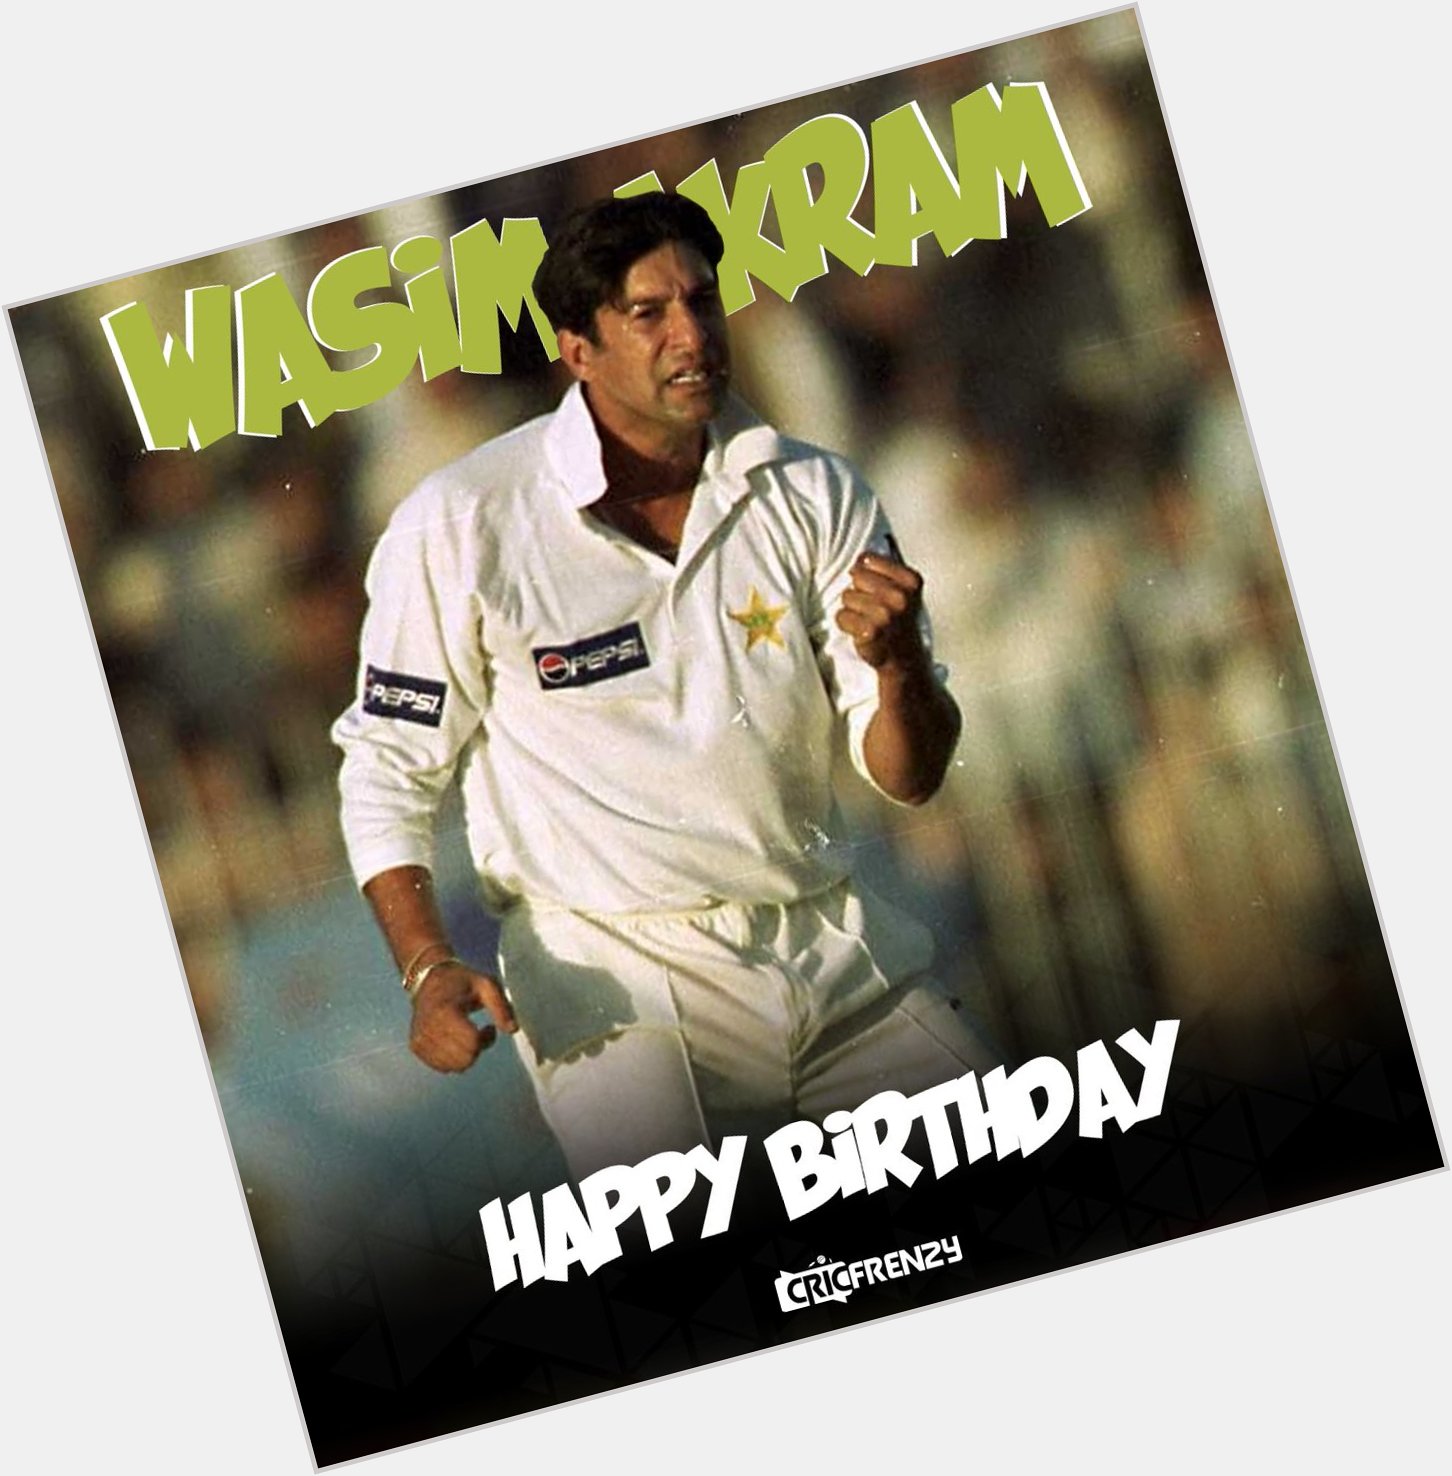 1992 World Cup winner Happy birthday a \"Sultan of Swing\" Wasim Akram    